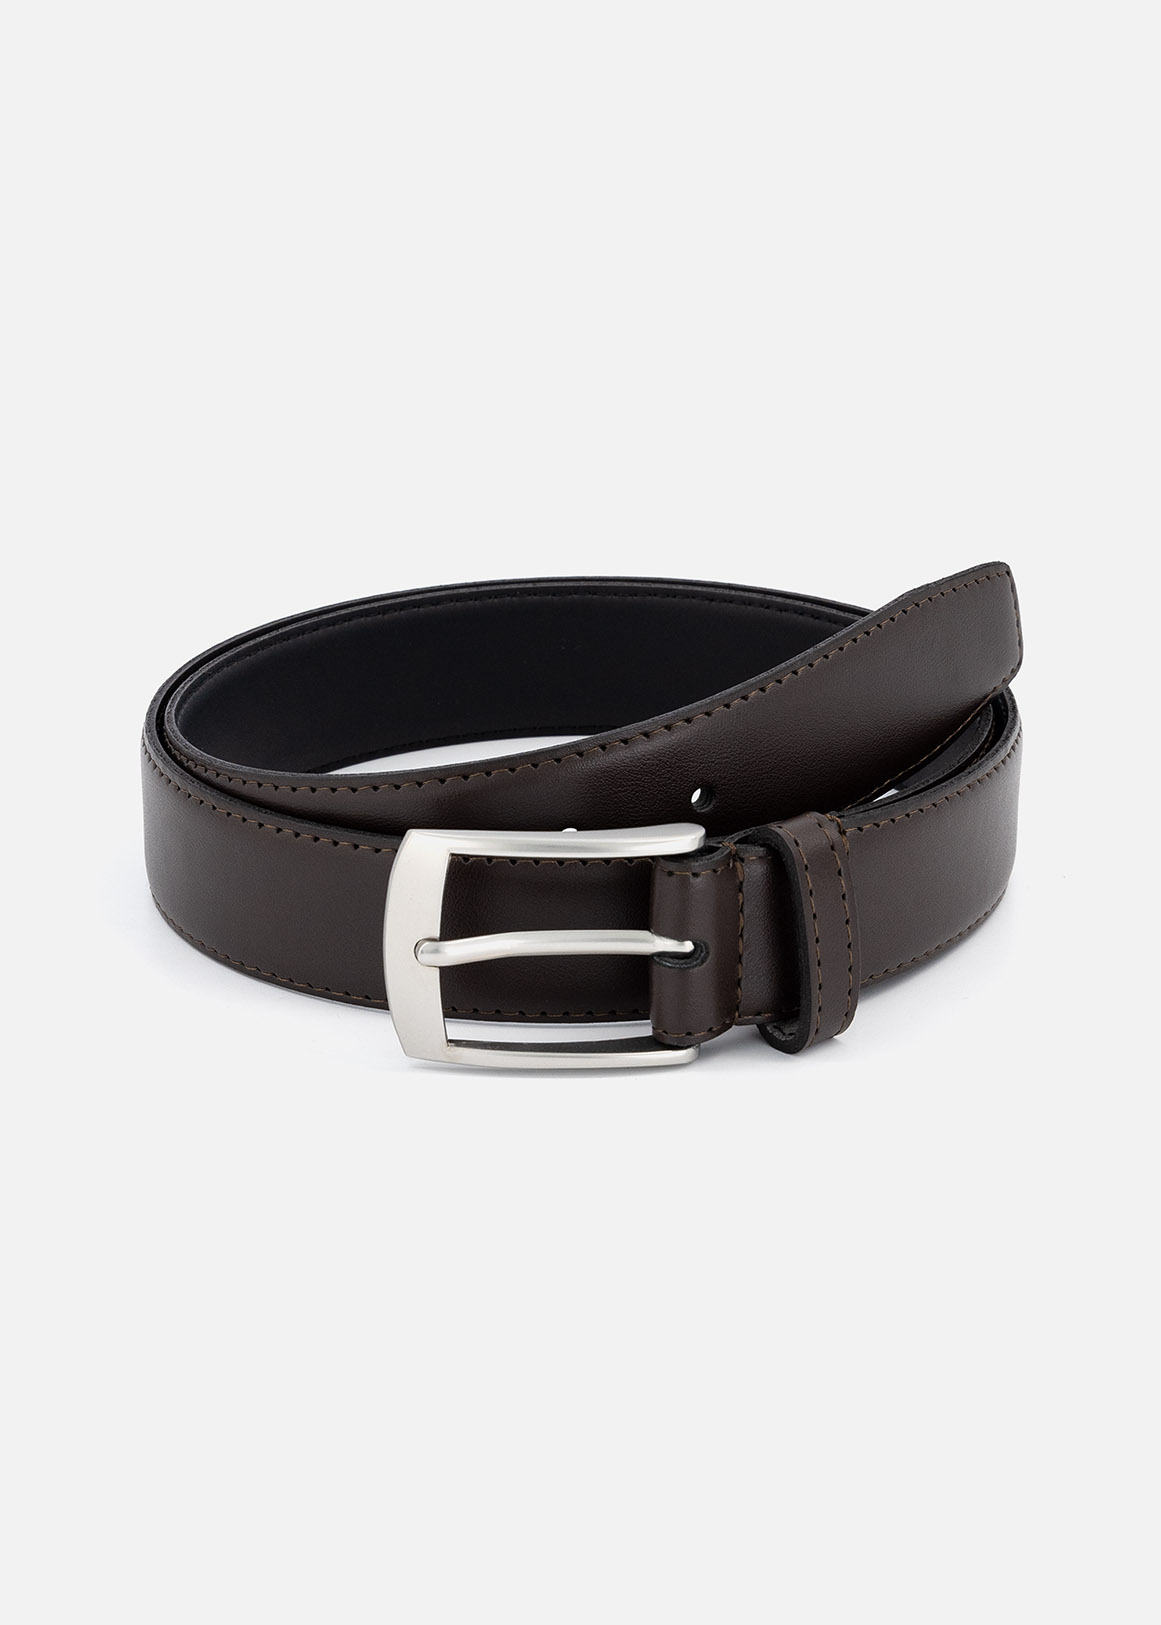 Formal Leather Belt | Woolworths.co.za